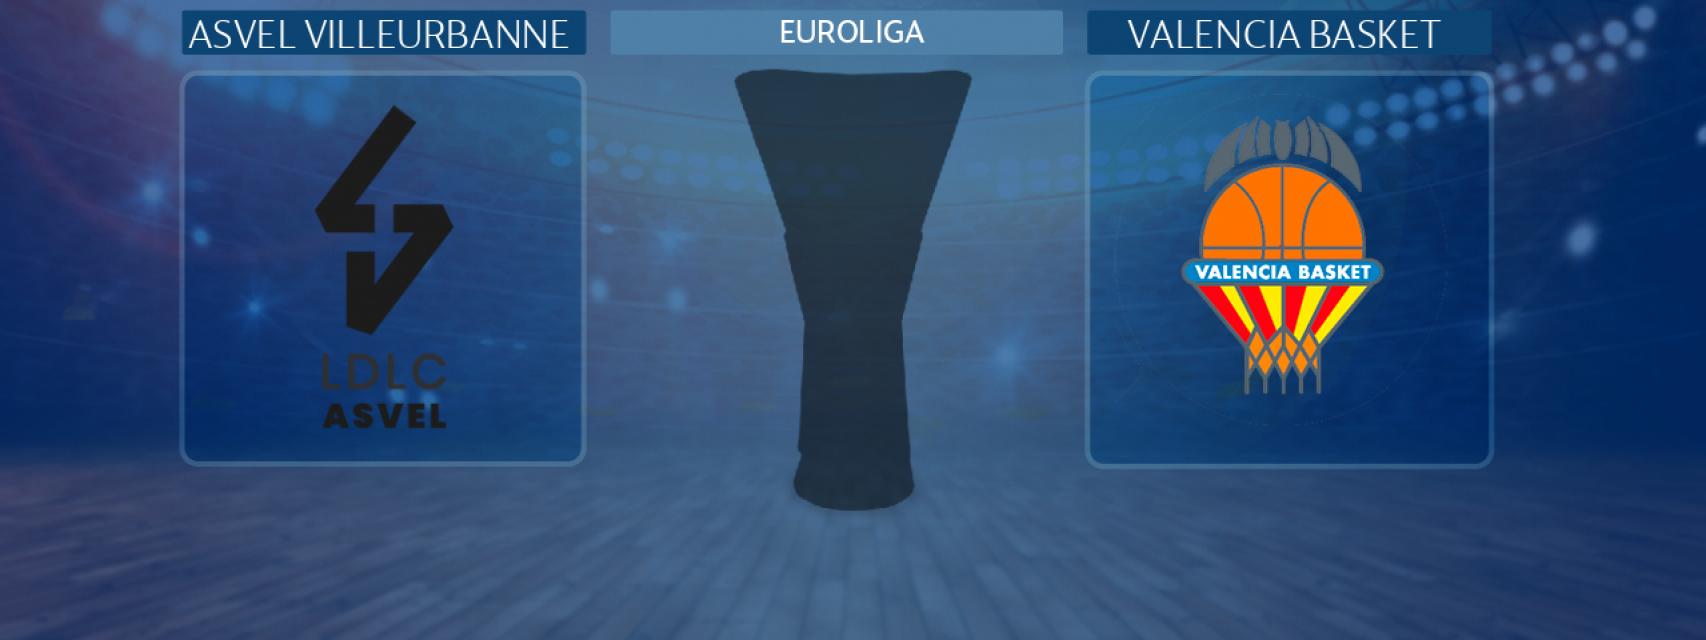 Asvel Villeurbanne - Valencia Basket, partido de la Euroliga